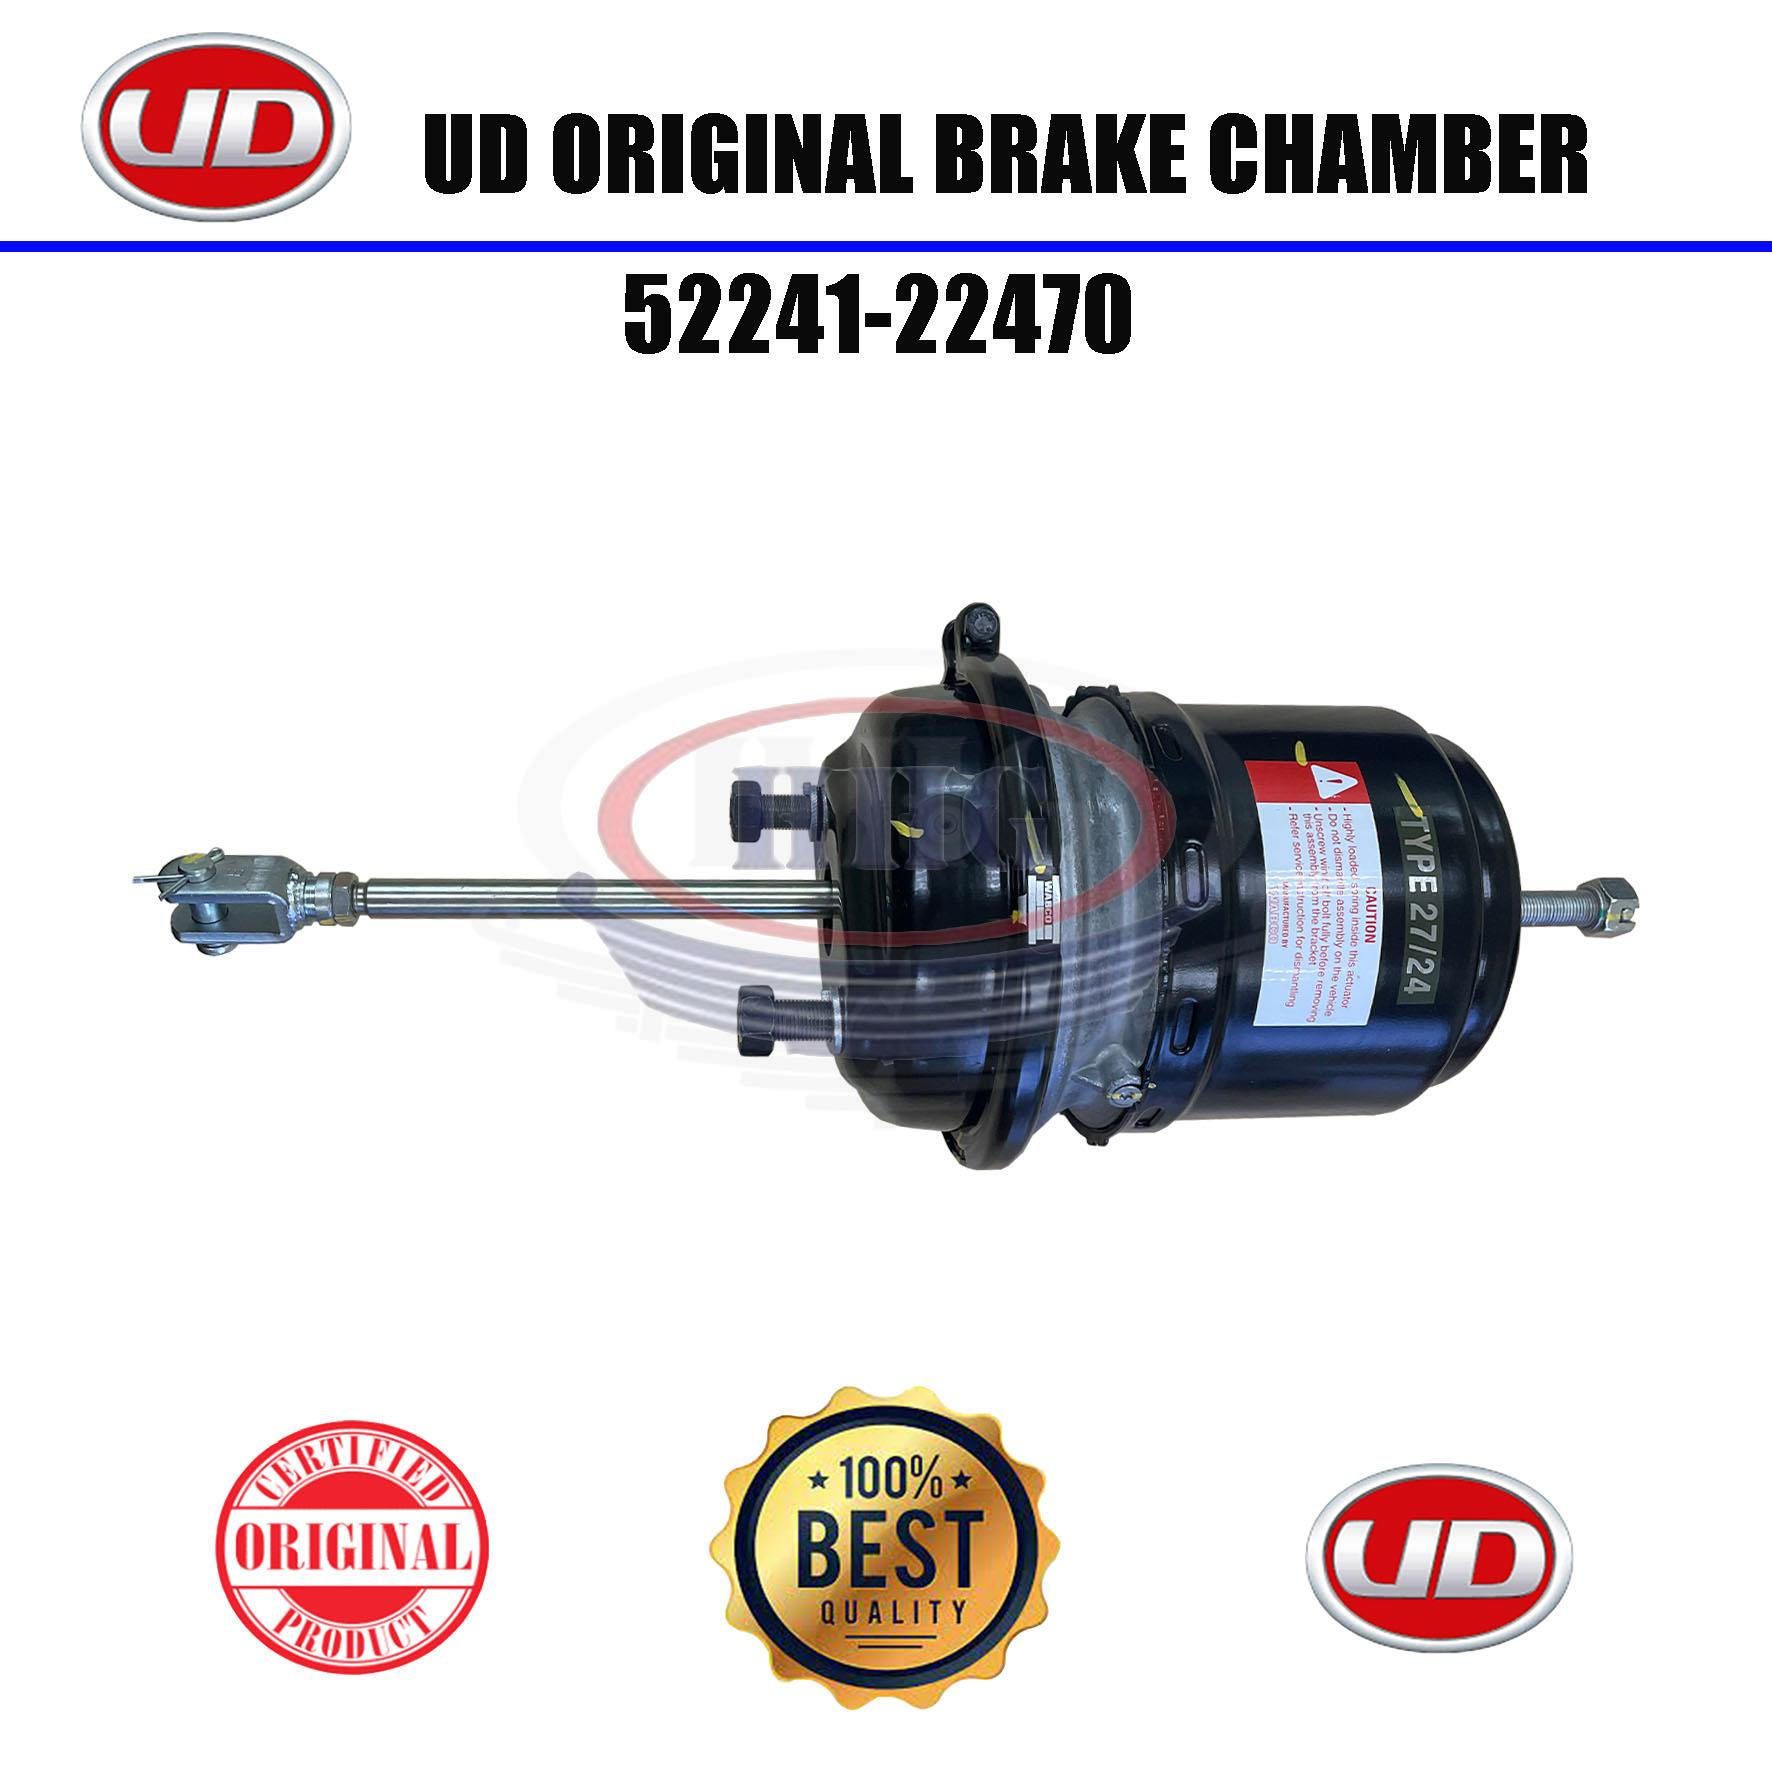 UD Original Quester Brake Chamber (52241-22470)